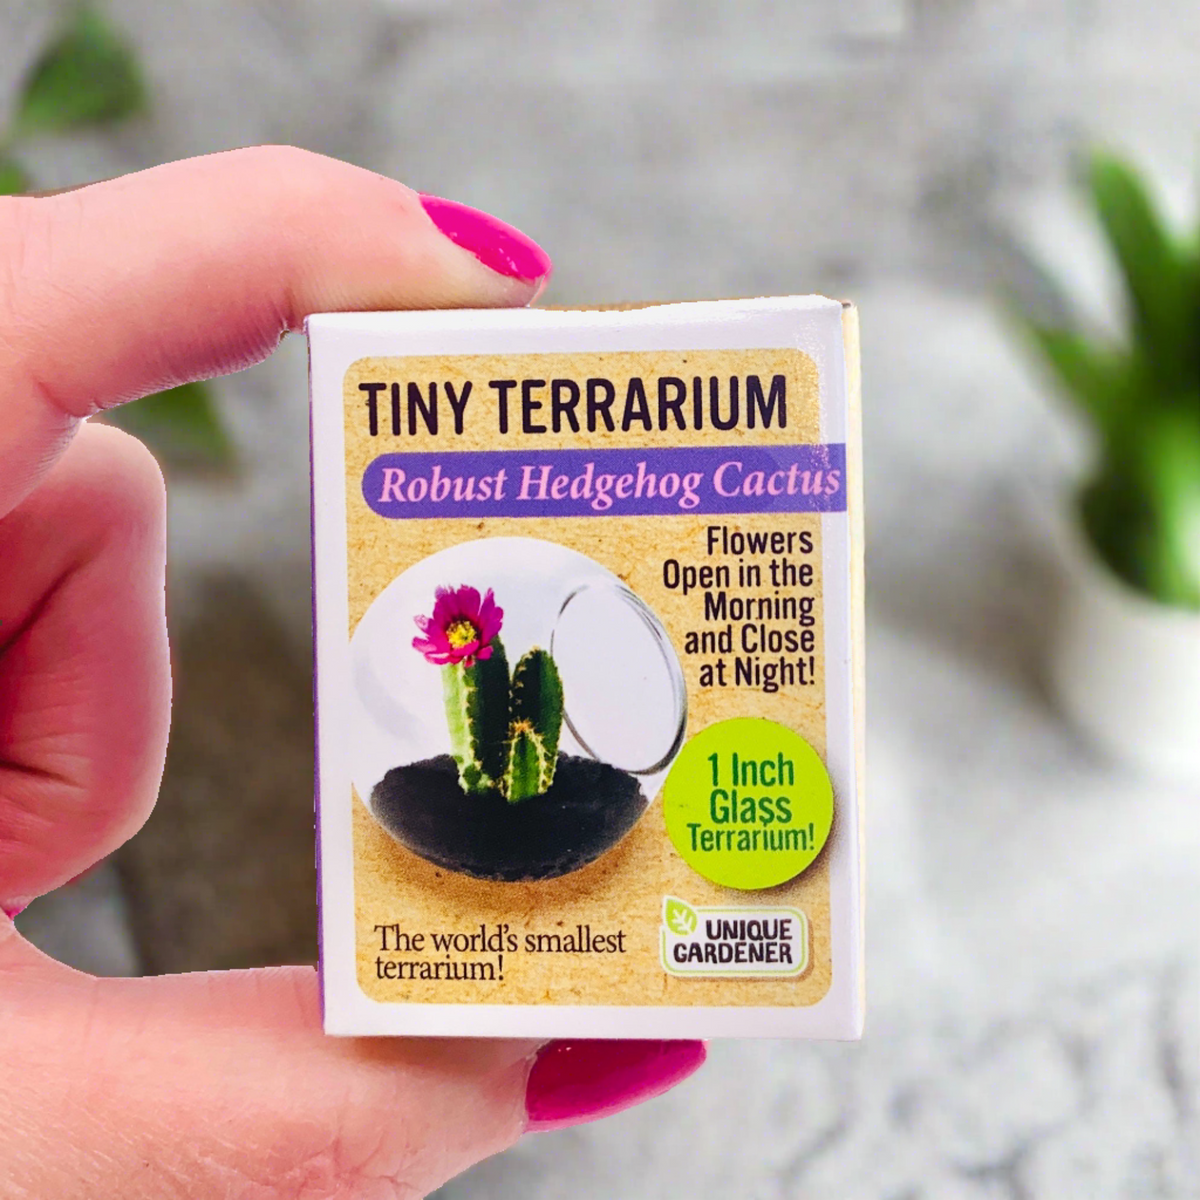 Tiny Terrarium, Robust Hedgehog Cactus